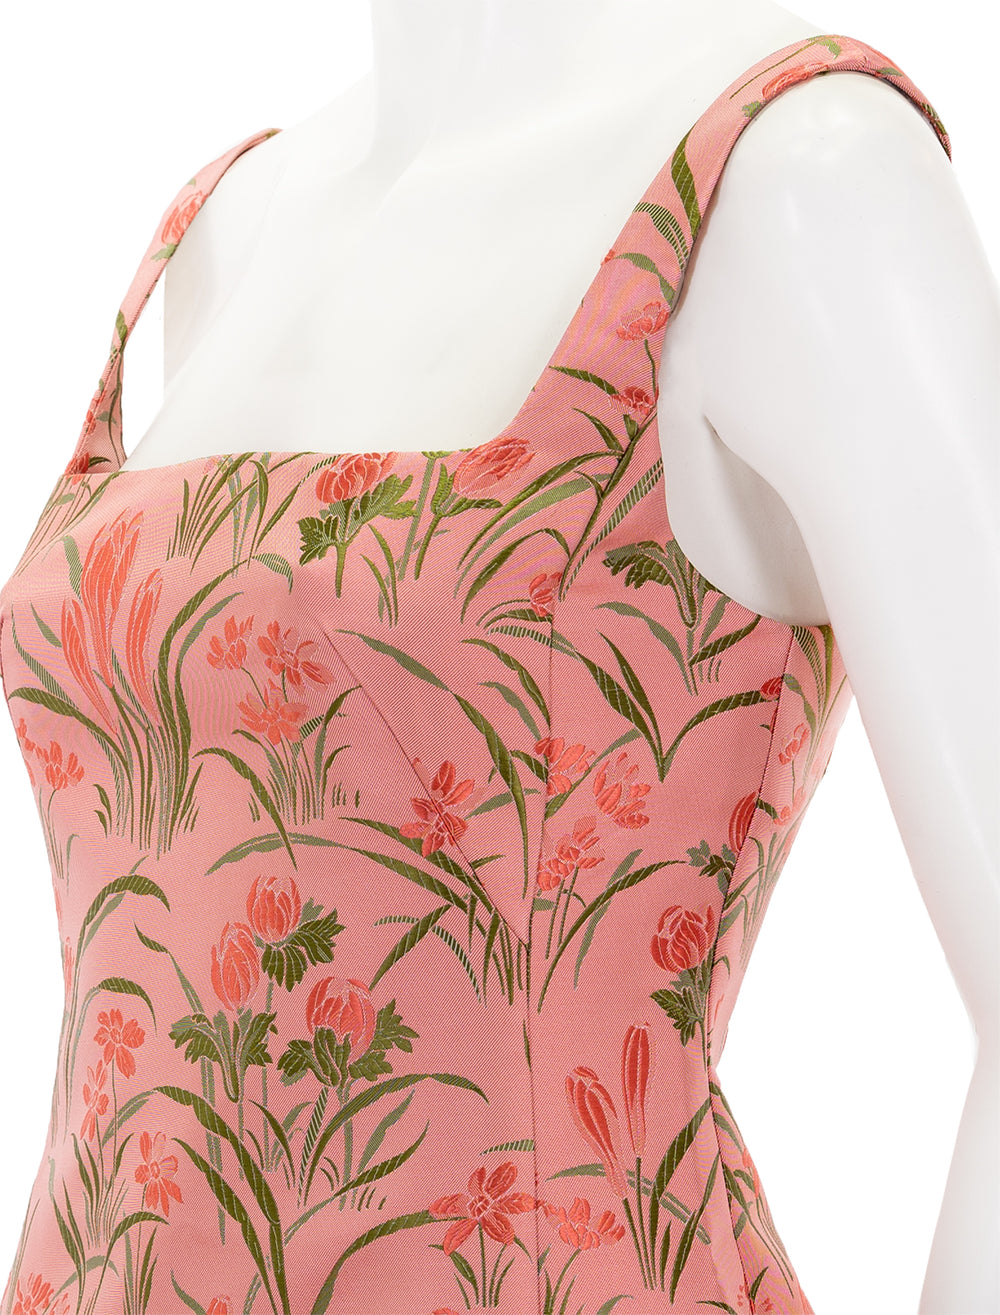 Close-up view of Cara Cara's carlie dress in pink jacquard.